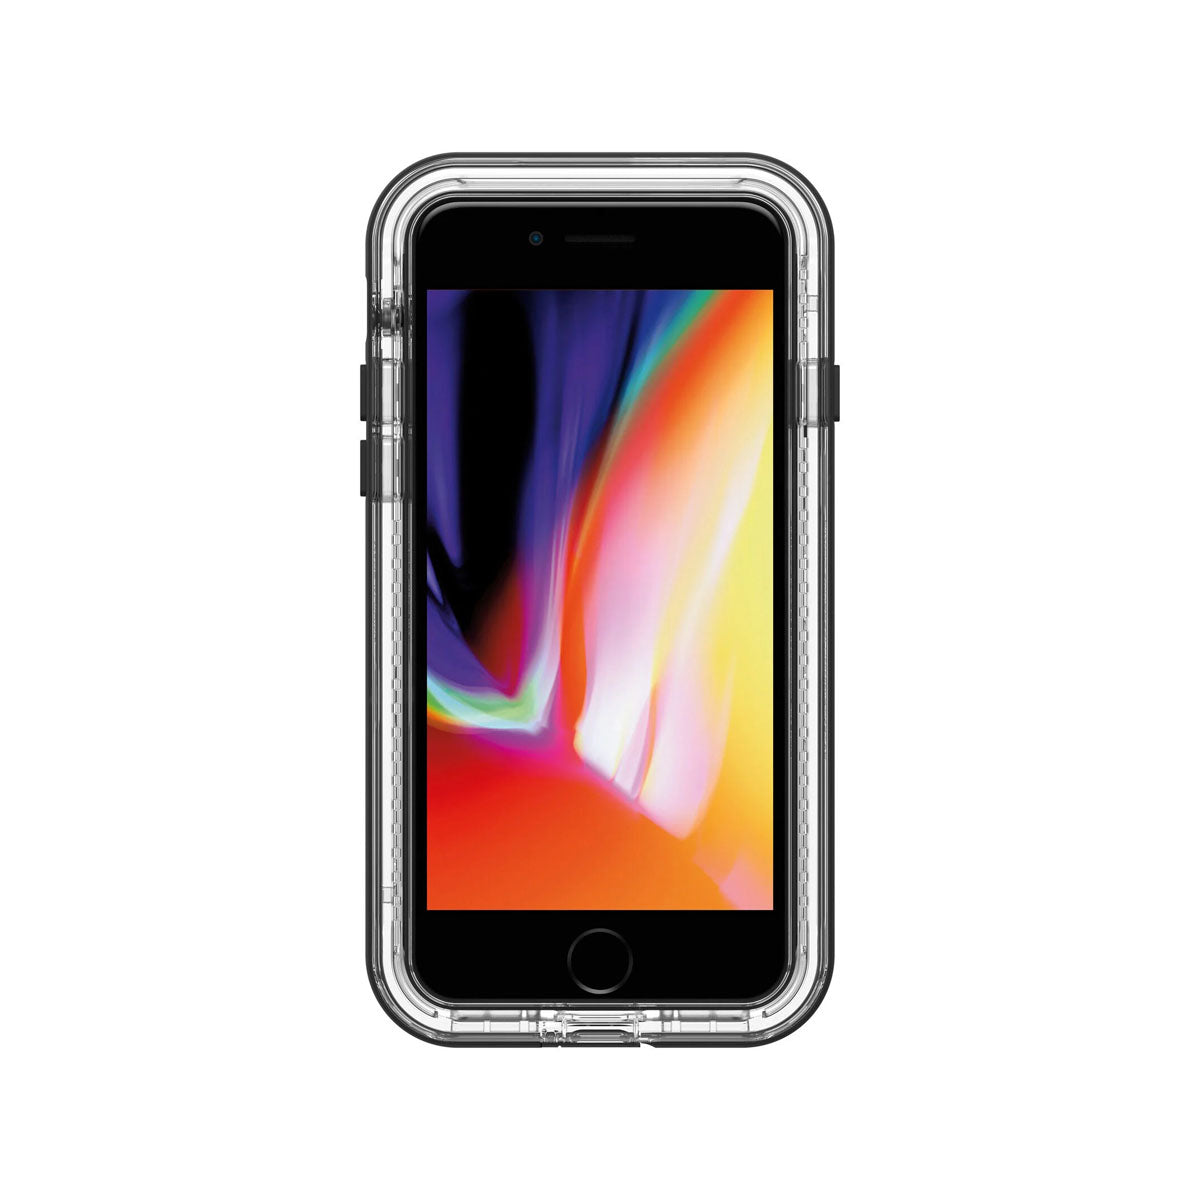 LifeProof Next Case for iPhone 7/8/SE Gen 2/3 - Black.